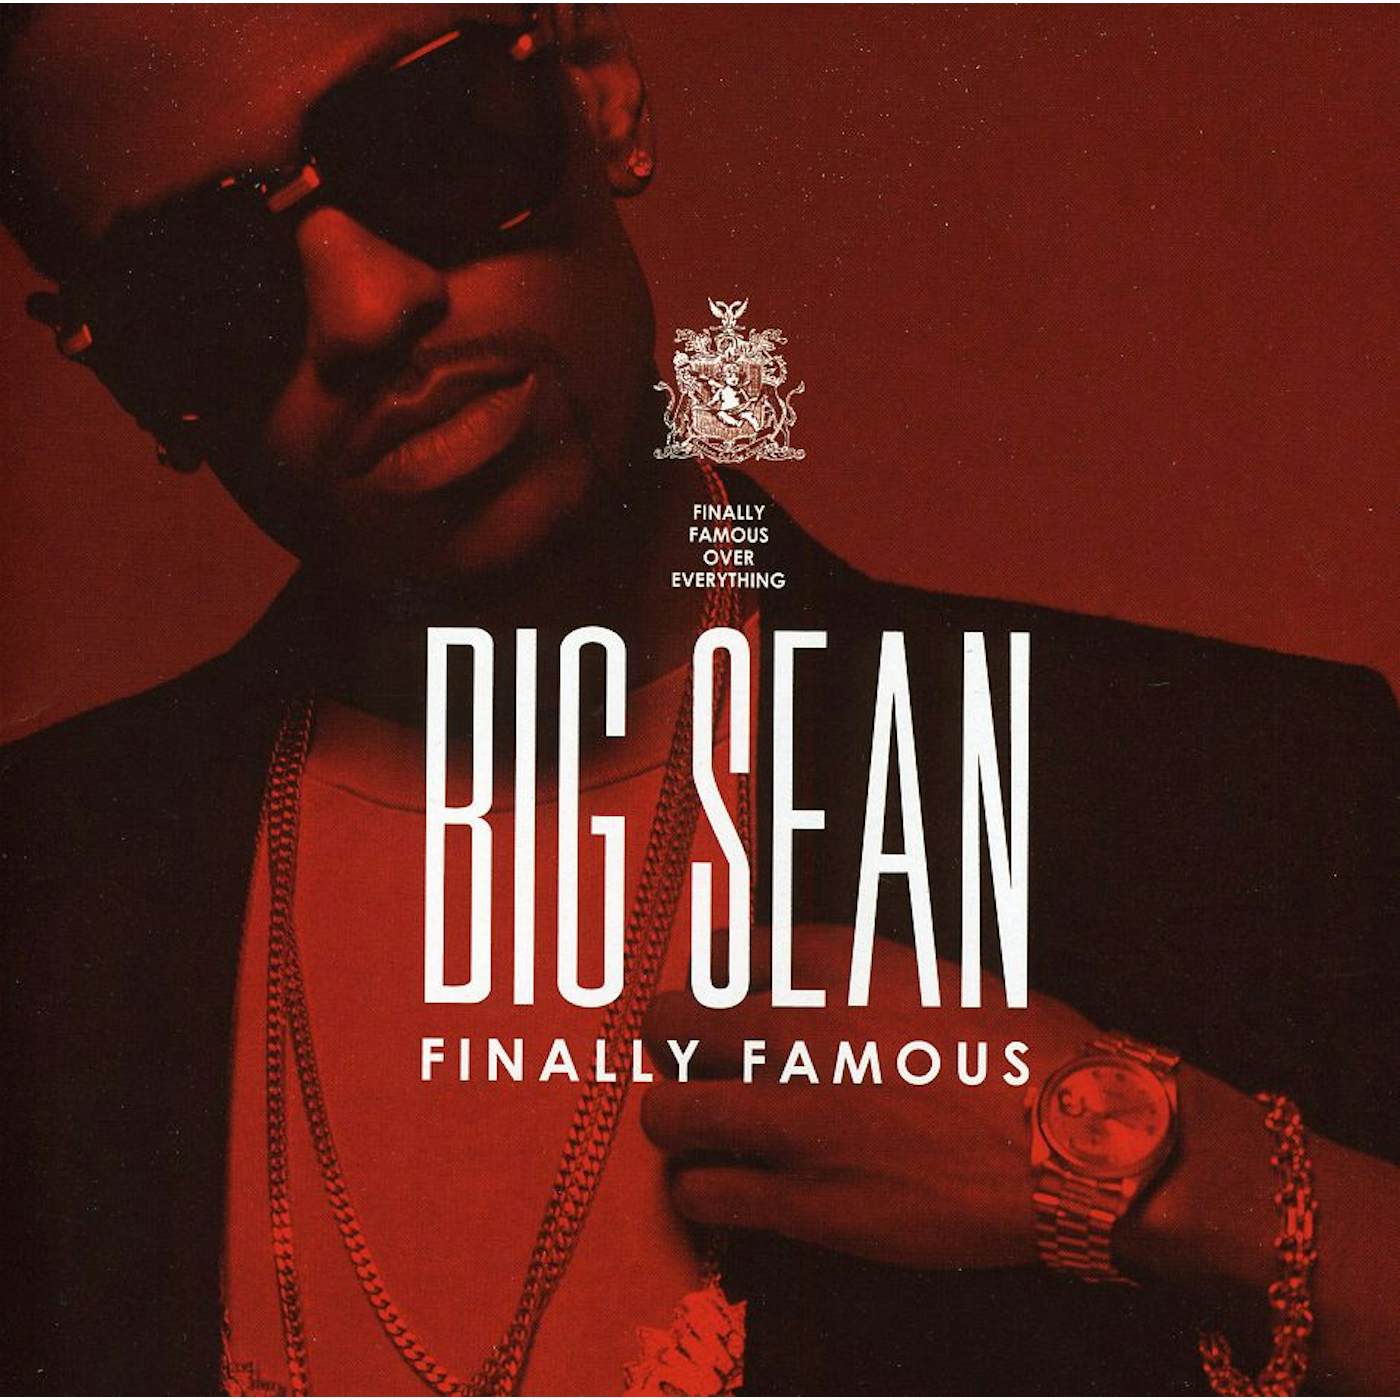 Big Sean FINALLY FAMOUS: THE ALBUM CD